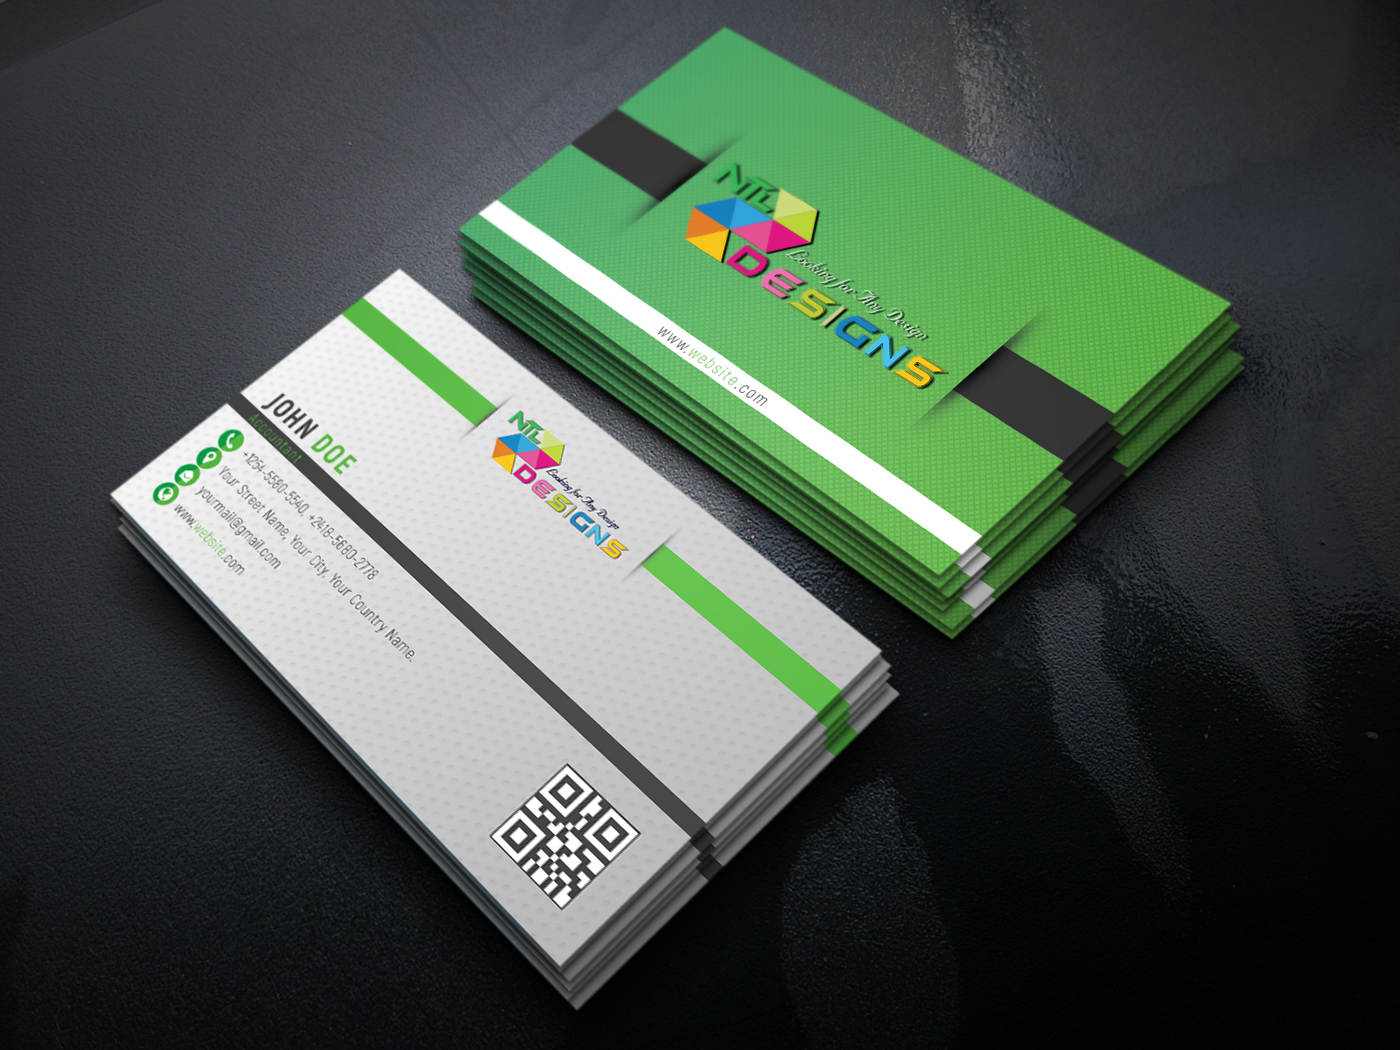 #businesscard #business   #card #VigitingCard #GraphicsDesign #Design #latest #best #smartcard #modern  